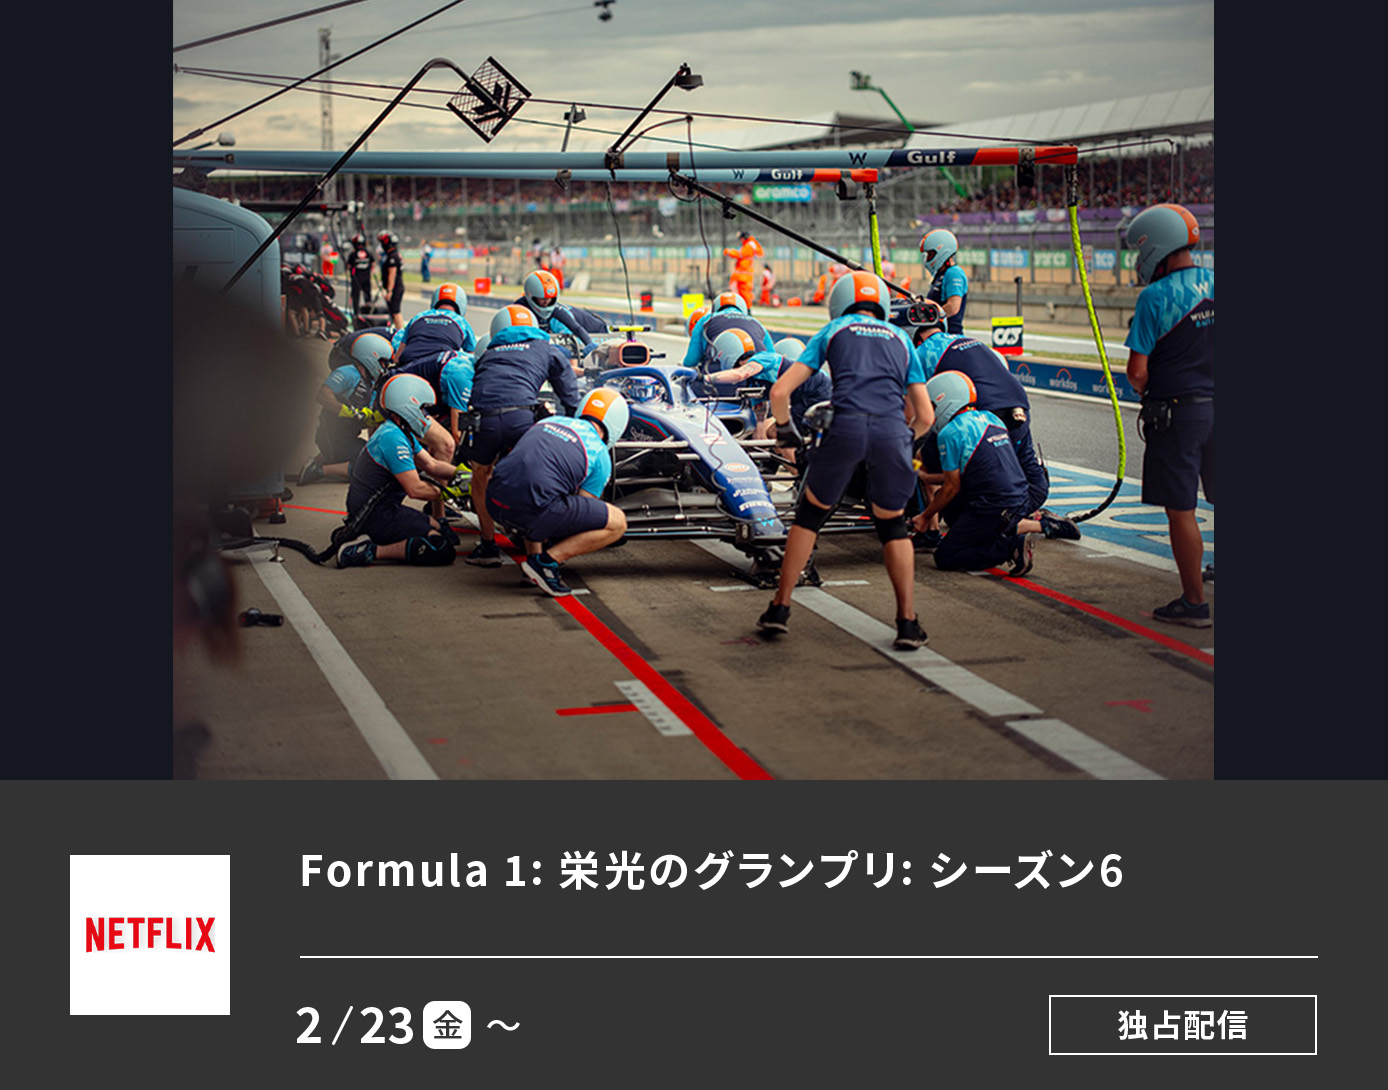 Formula 1: 栄光のグランプリ: シーズン6